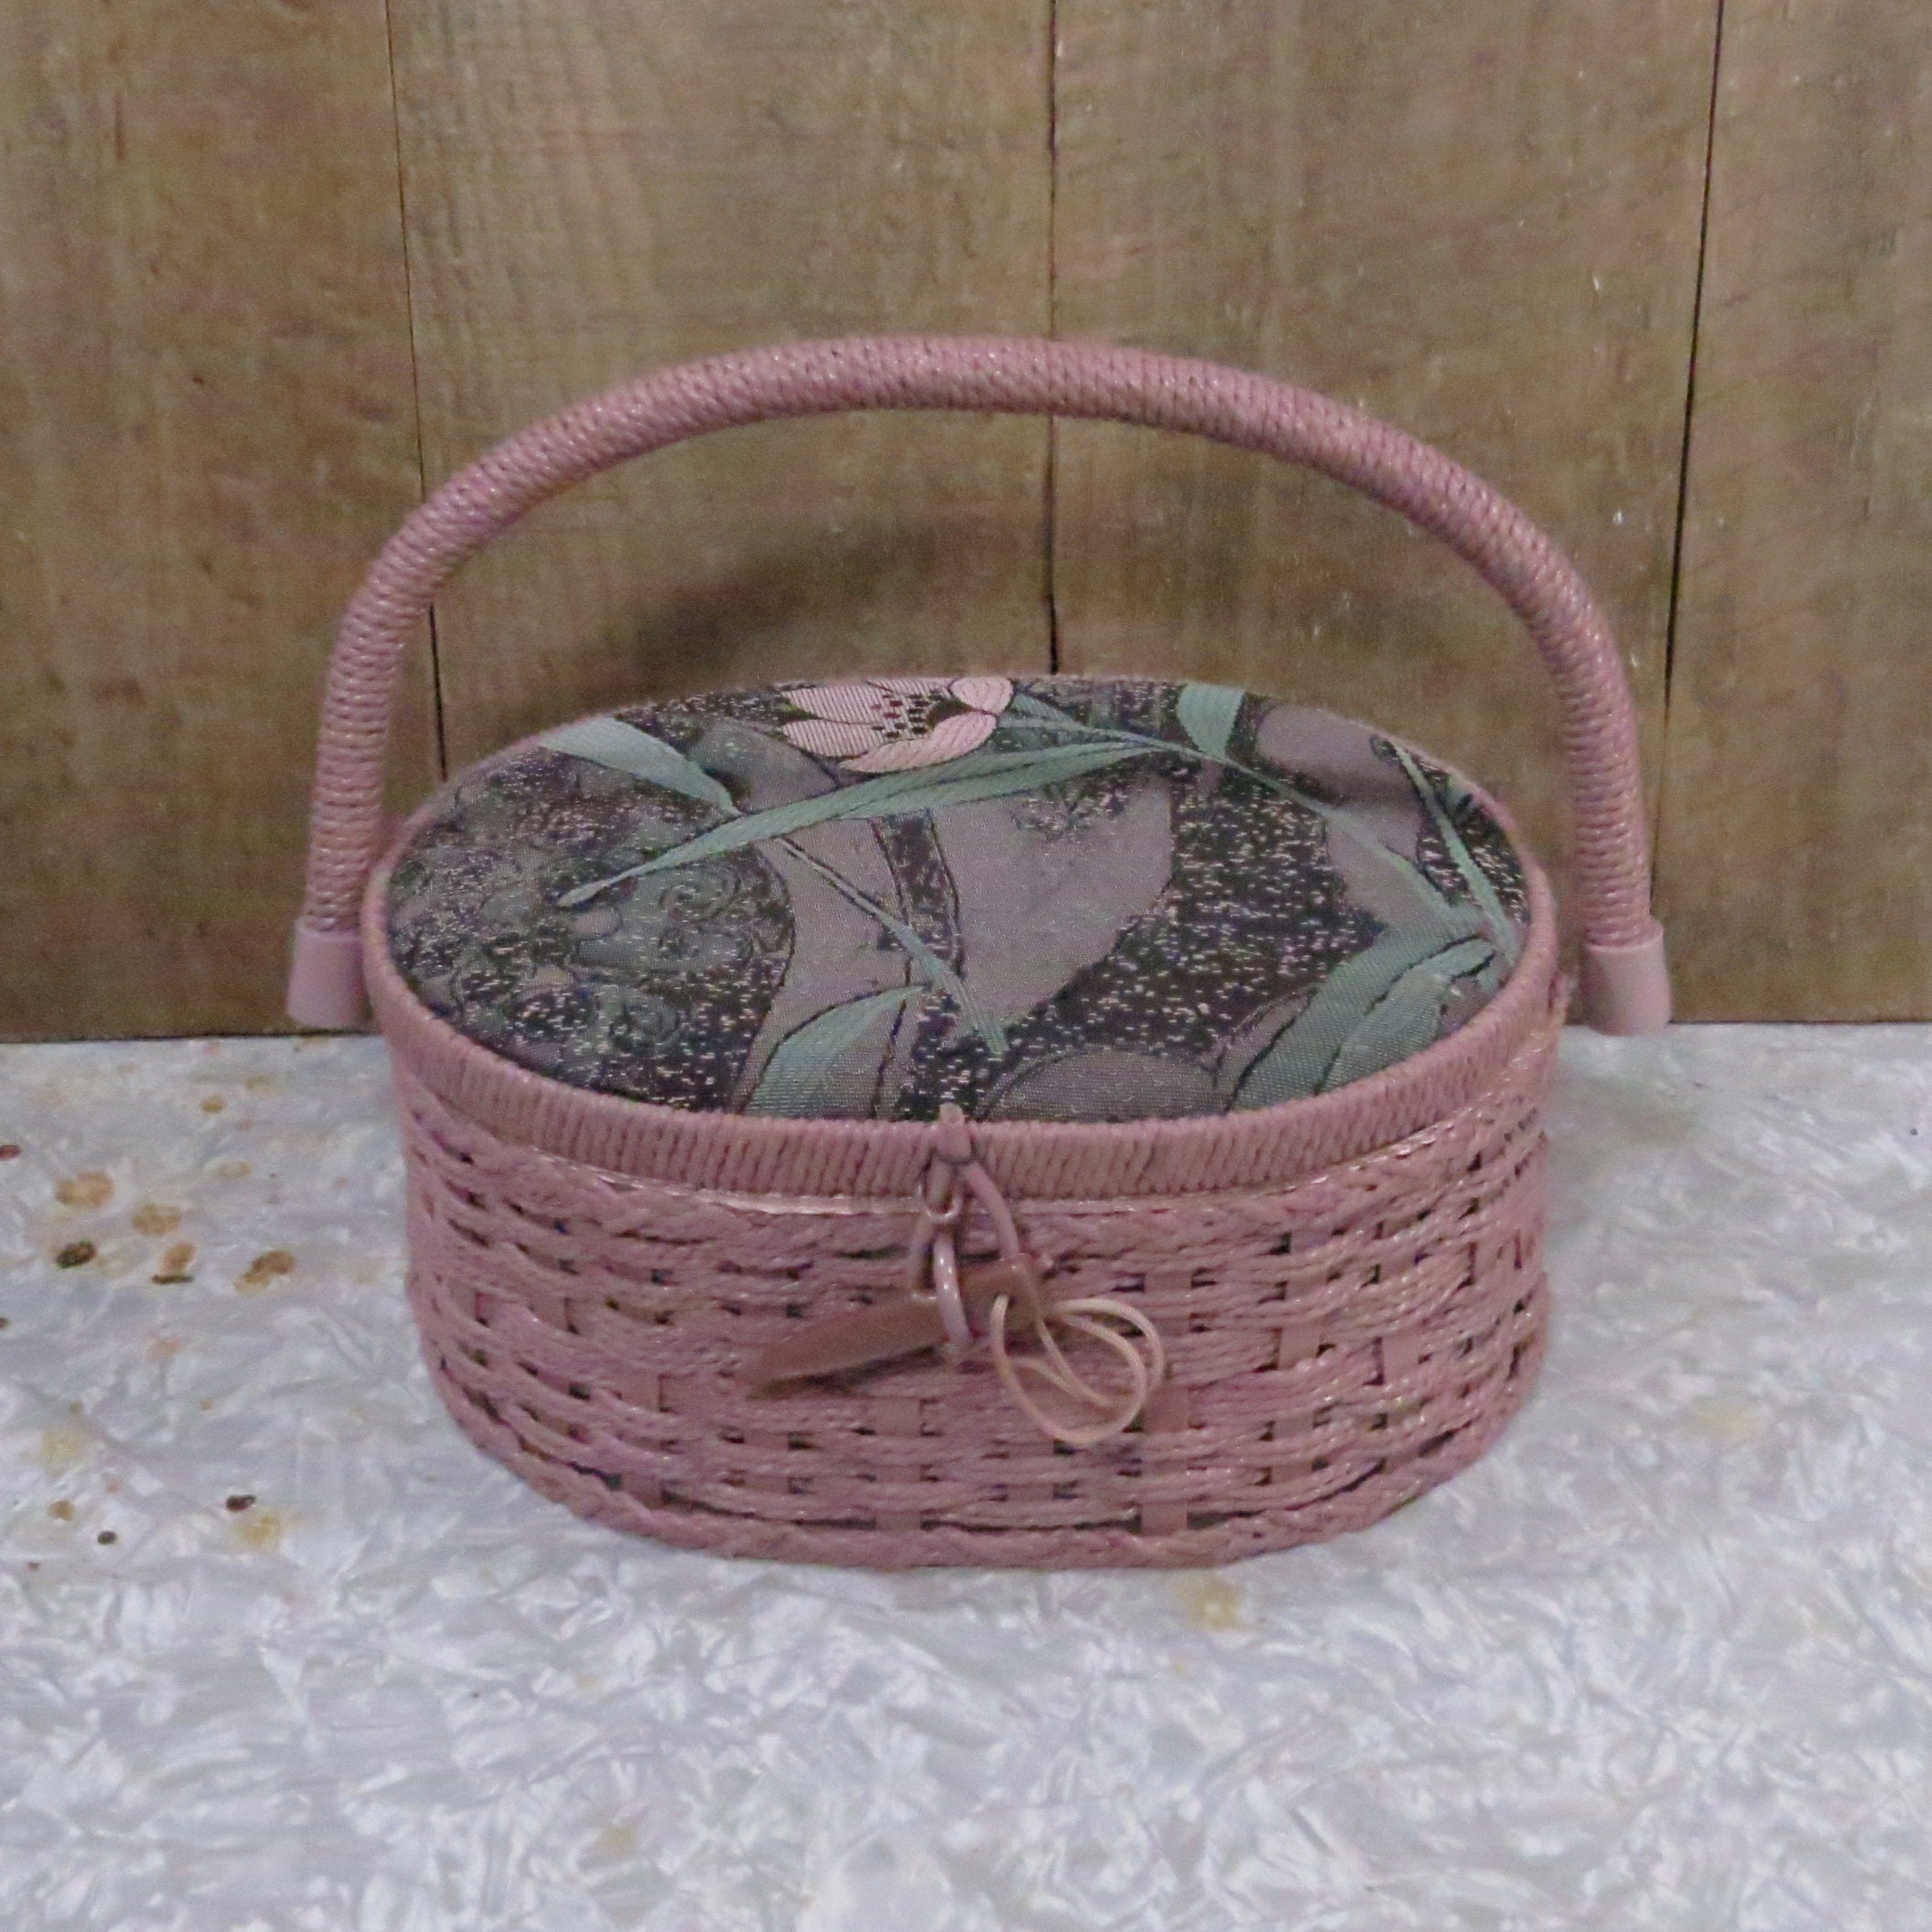 Cute Vintage Singer Sewing Basket Wicker Woven Mint Green & Pink Floral  1970's